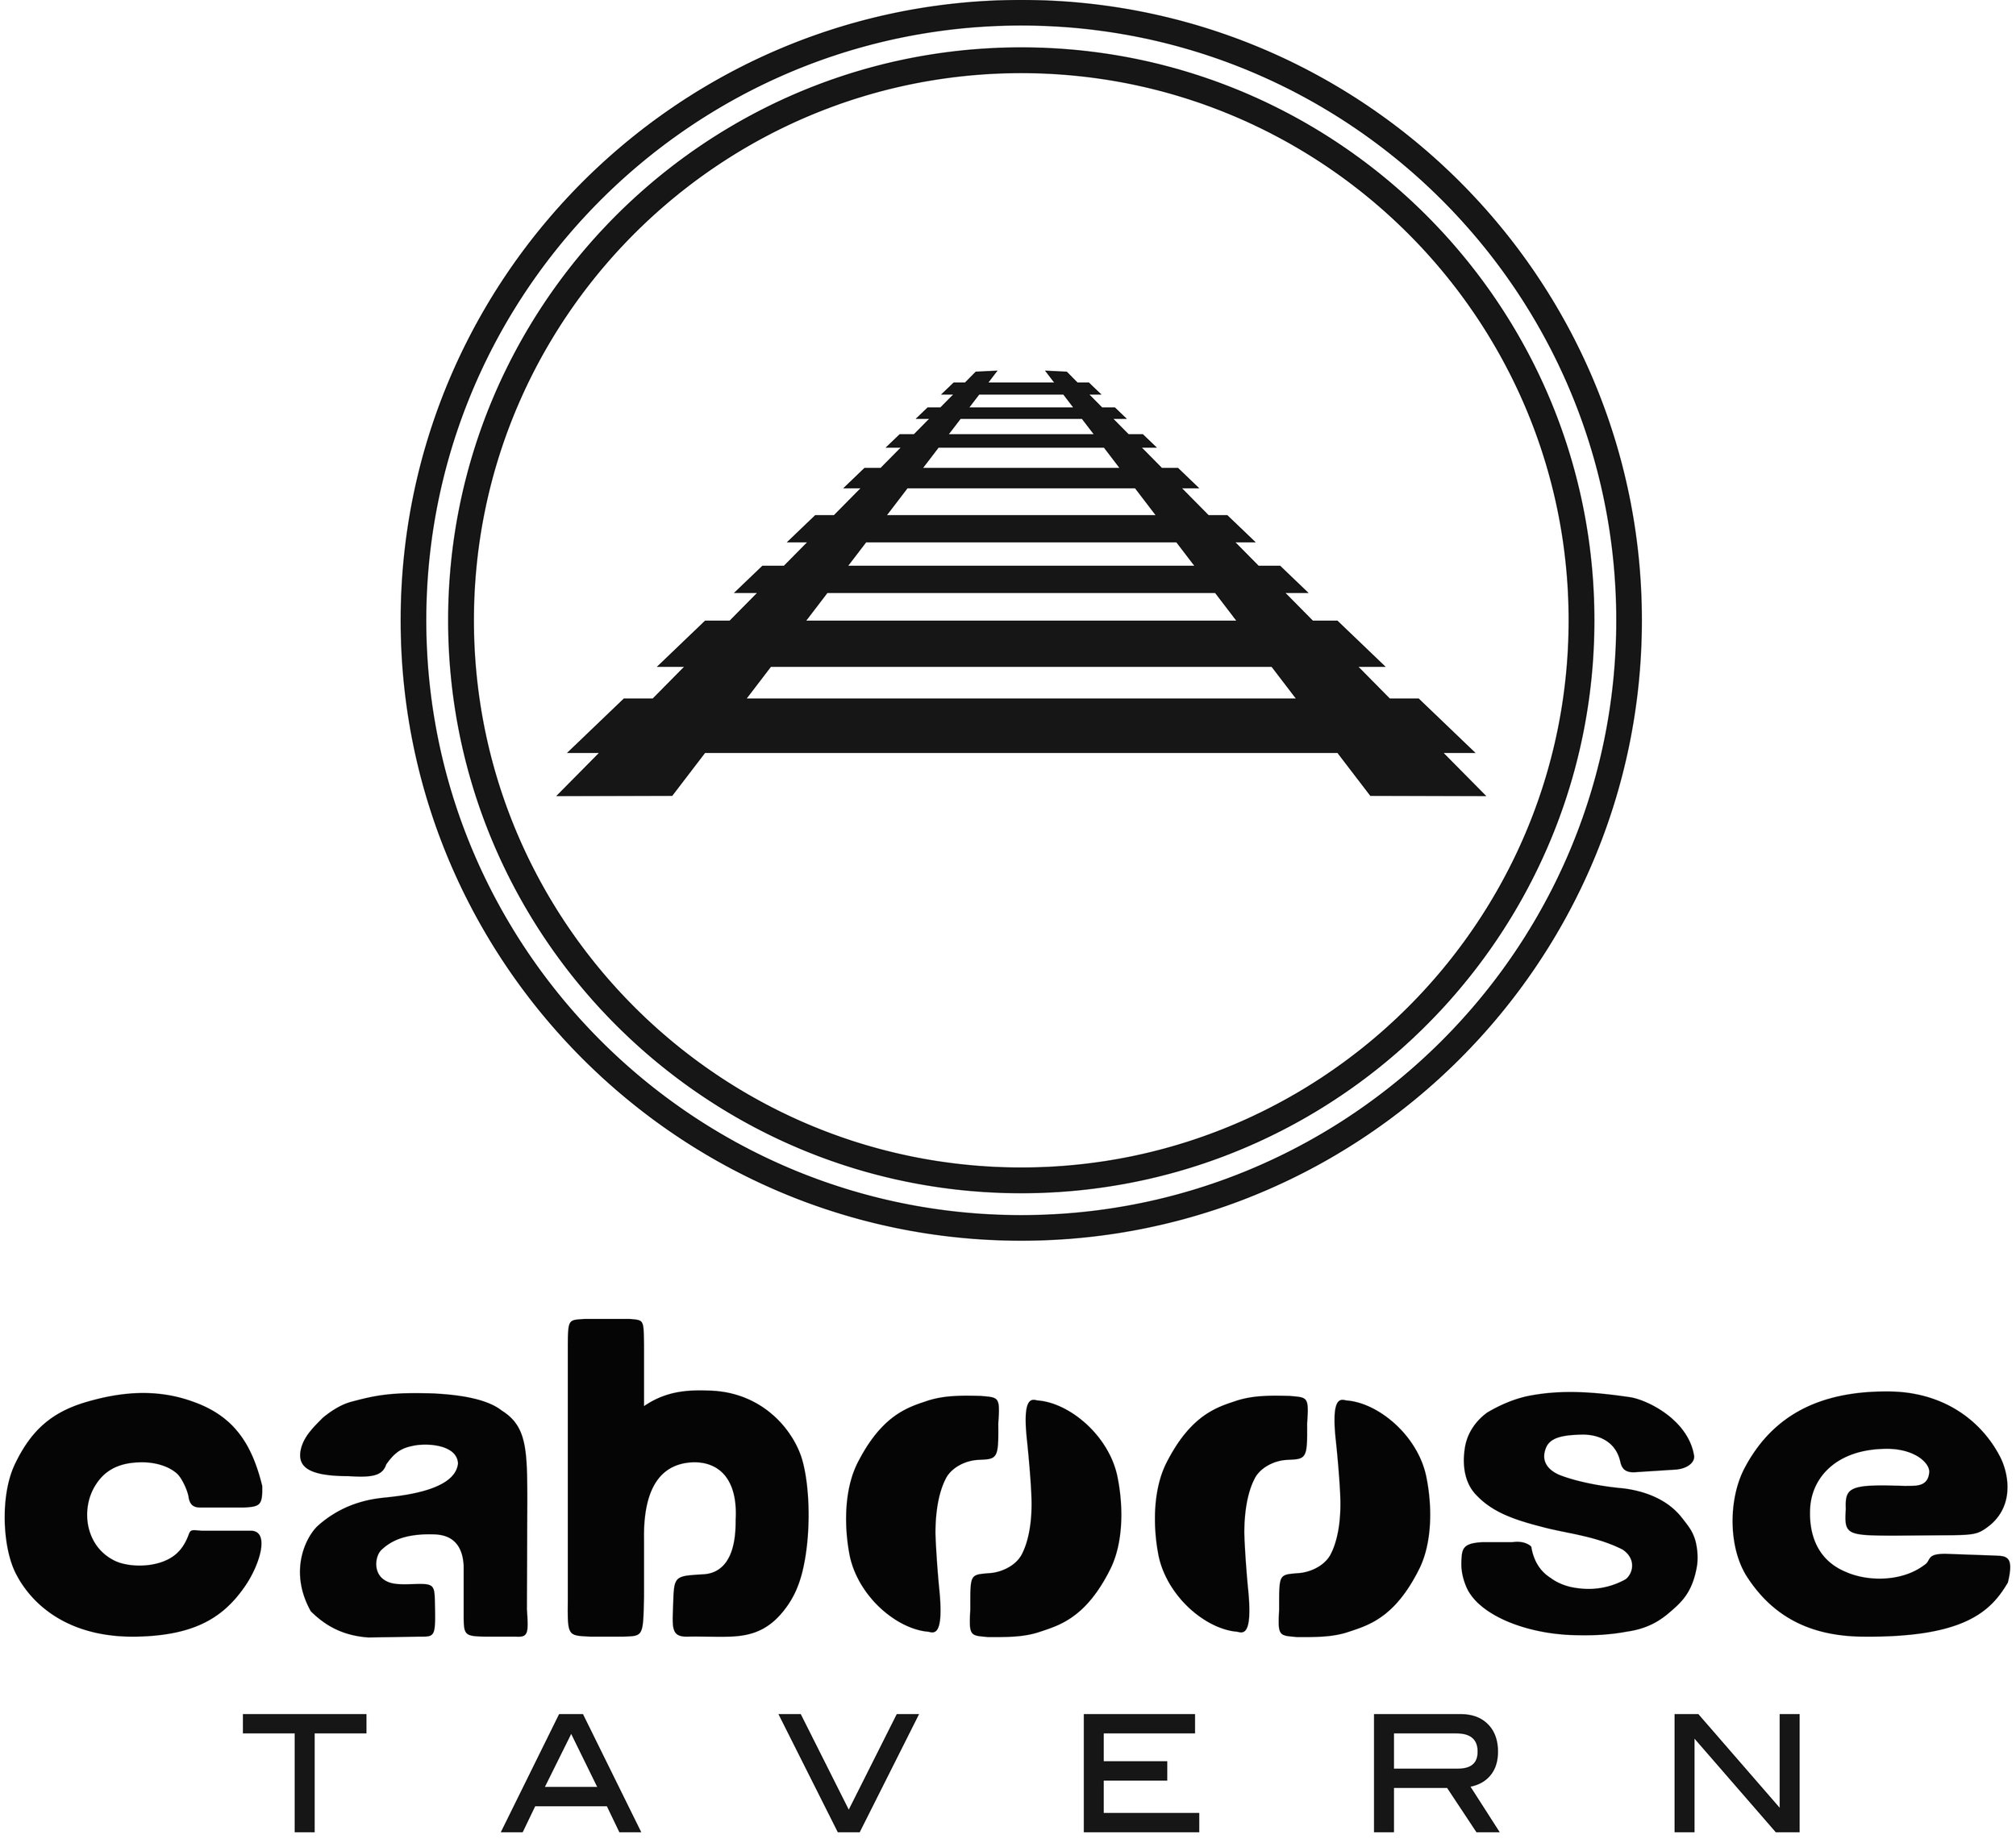 Caboose Logo.jpg